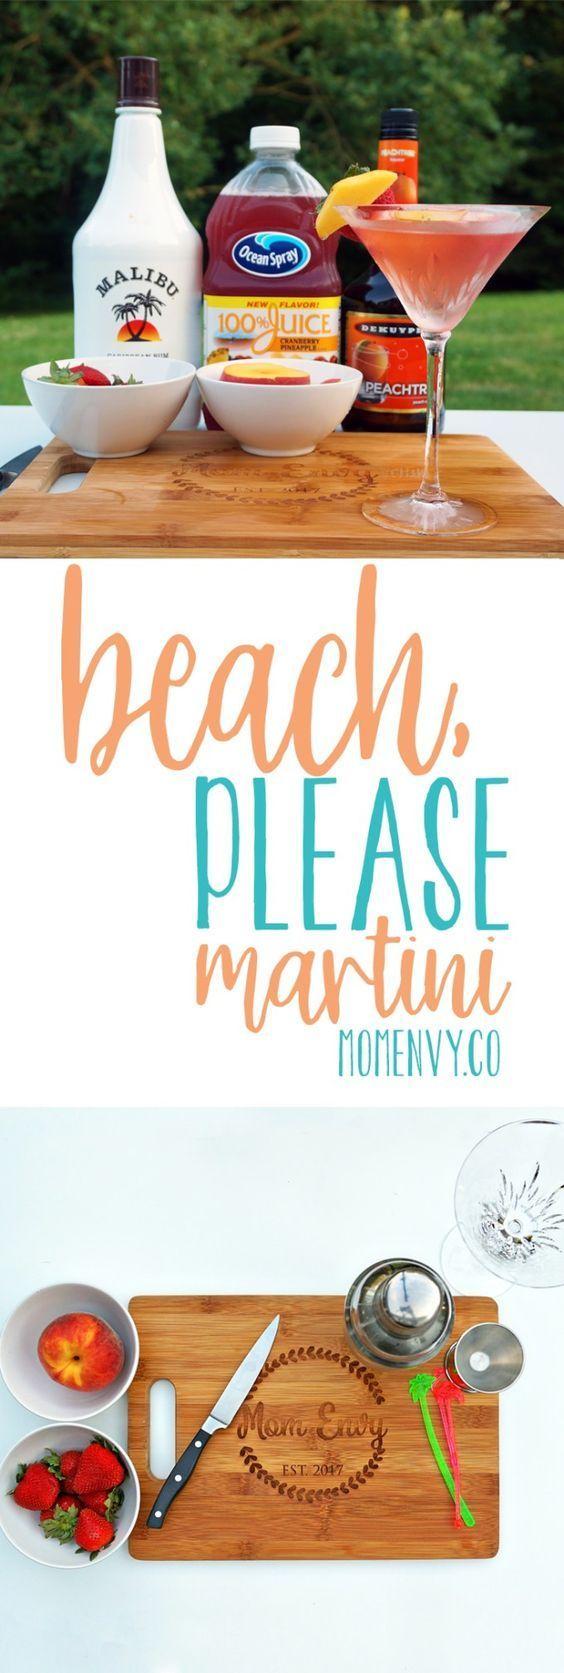 Hochzeit - Beach Please Martini - An Easy And Fruity Summer Cocktail